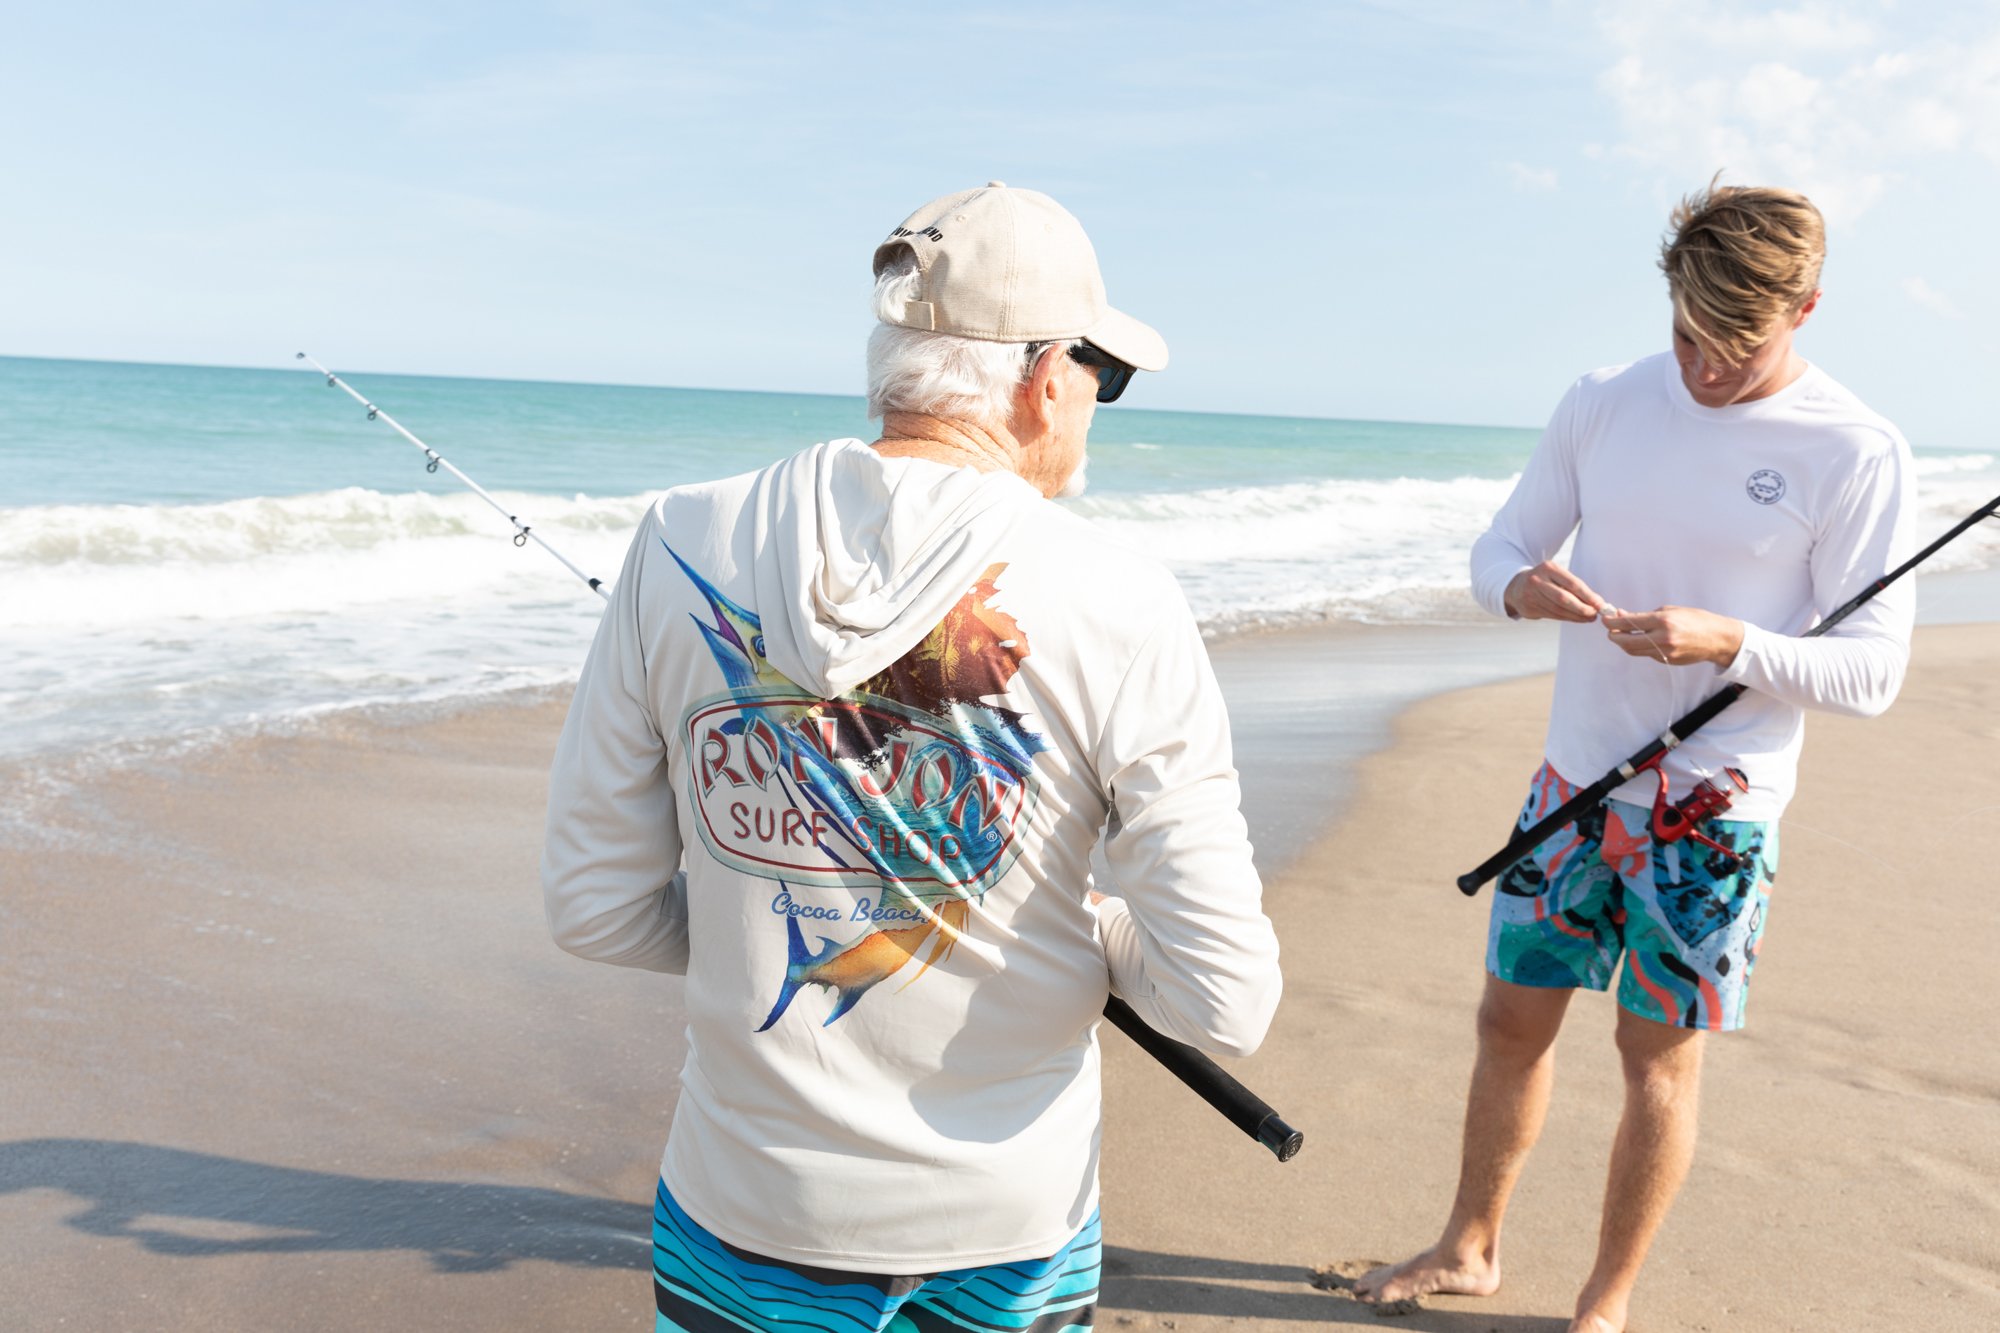 2 guys fishing on the beach in sunshirts